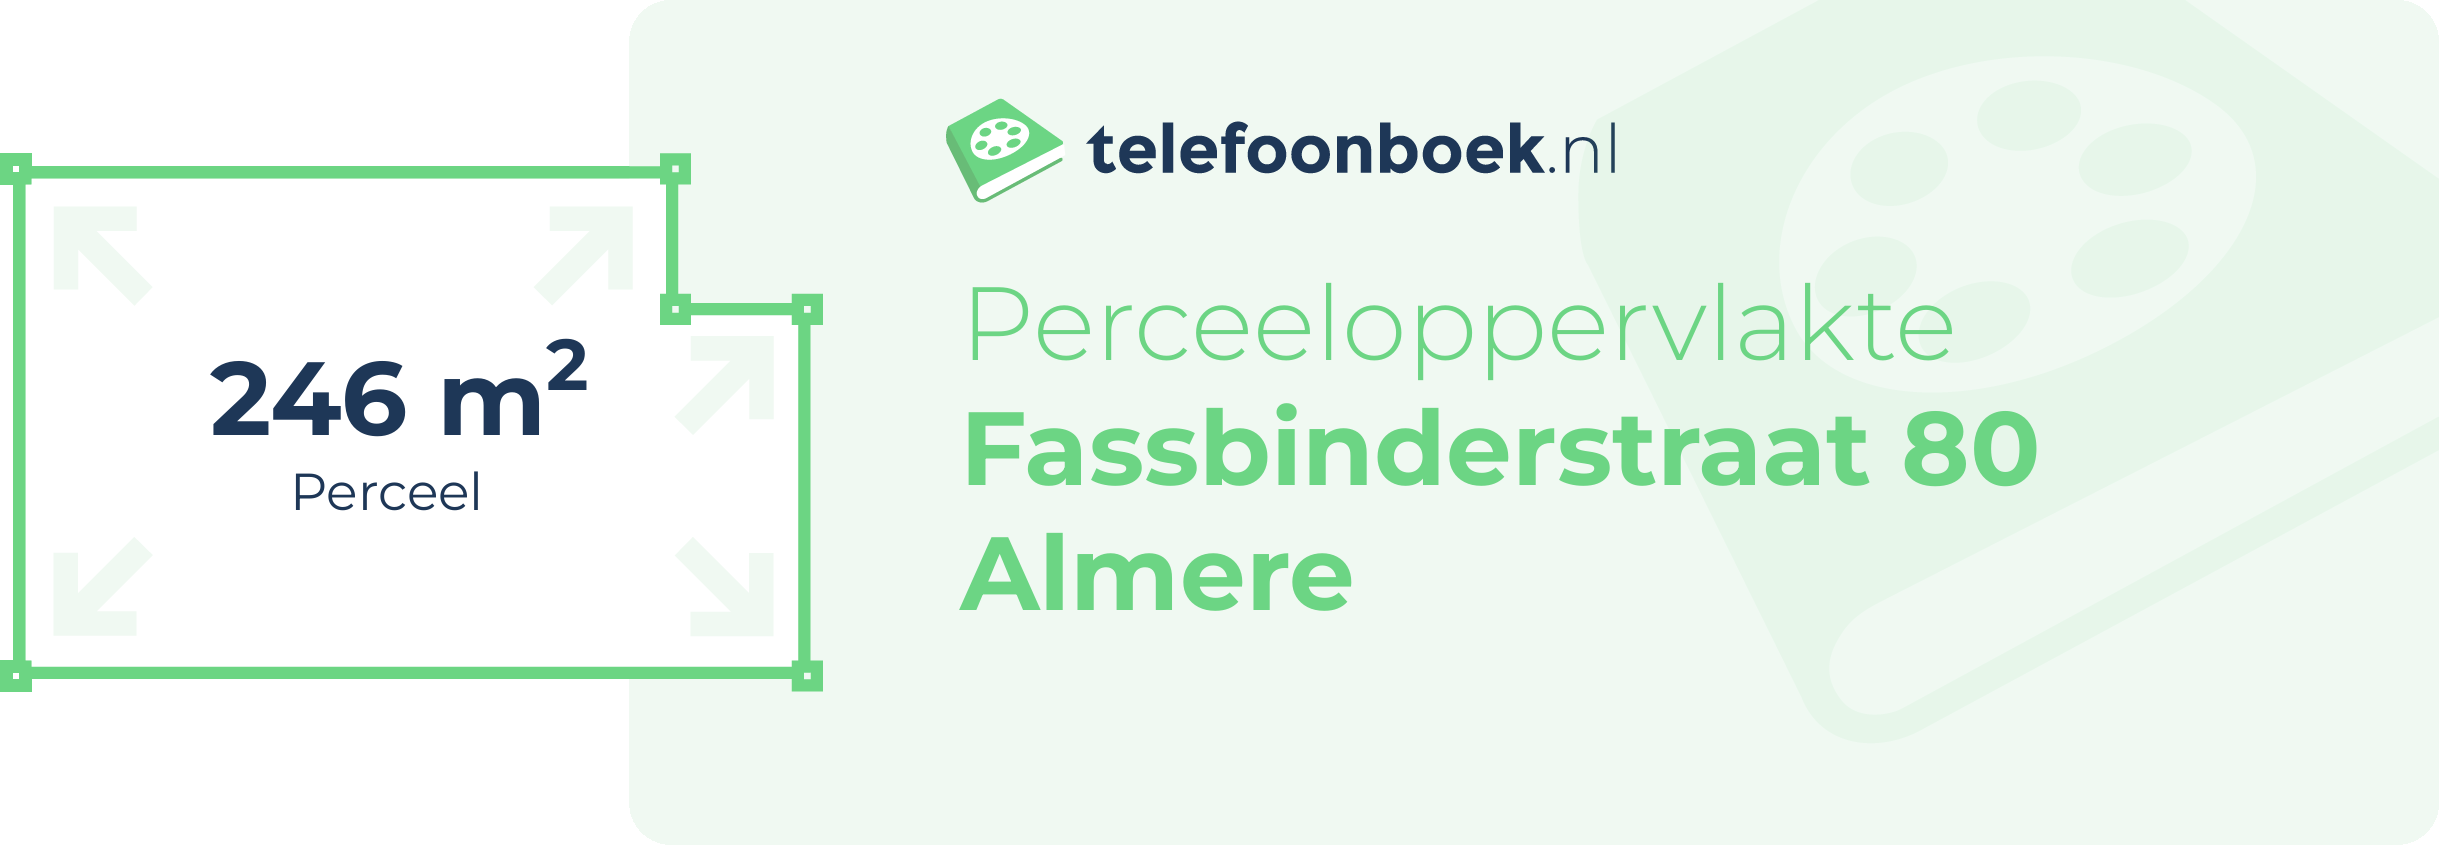 Perceeloppervlakte Fassbinderstraat 80 Almere